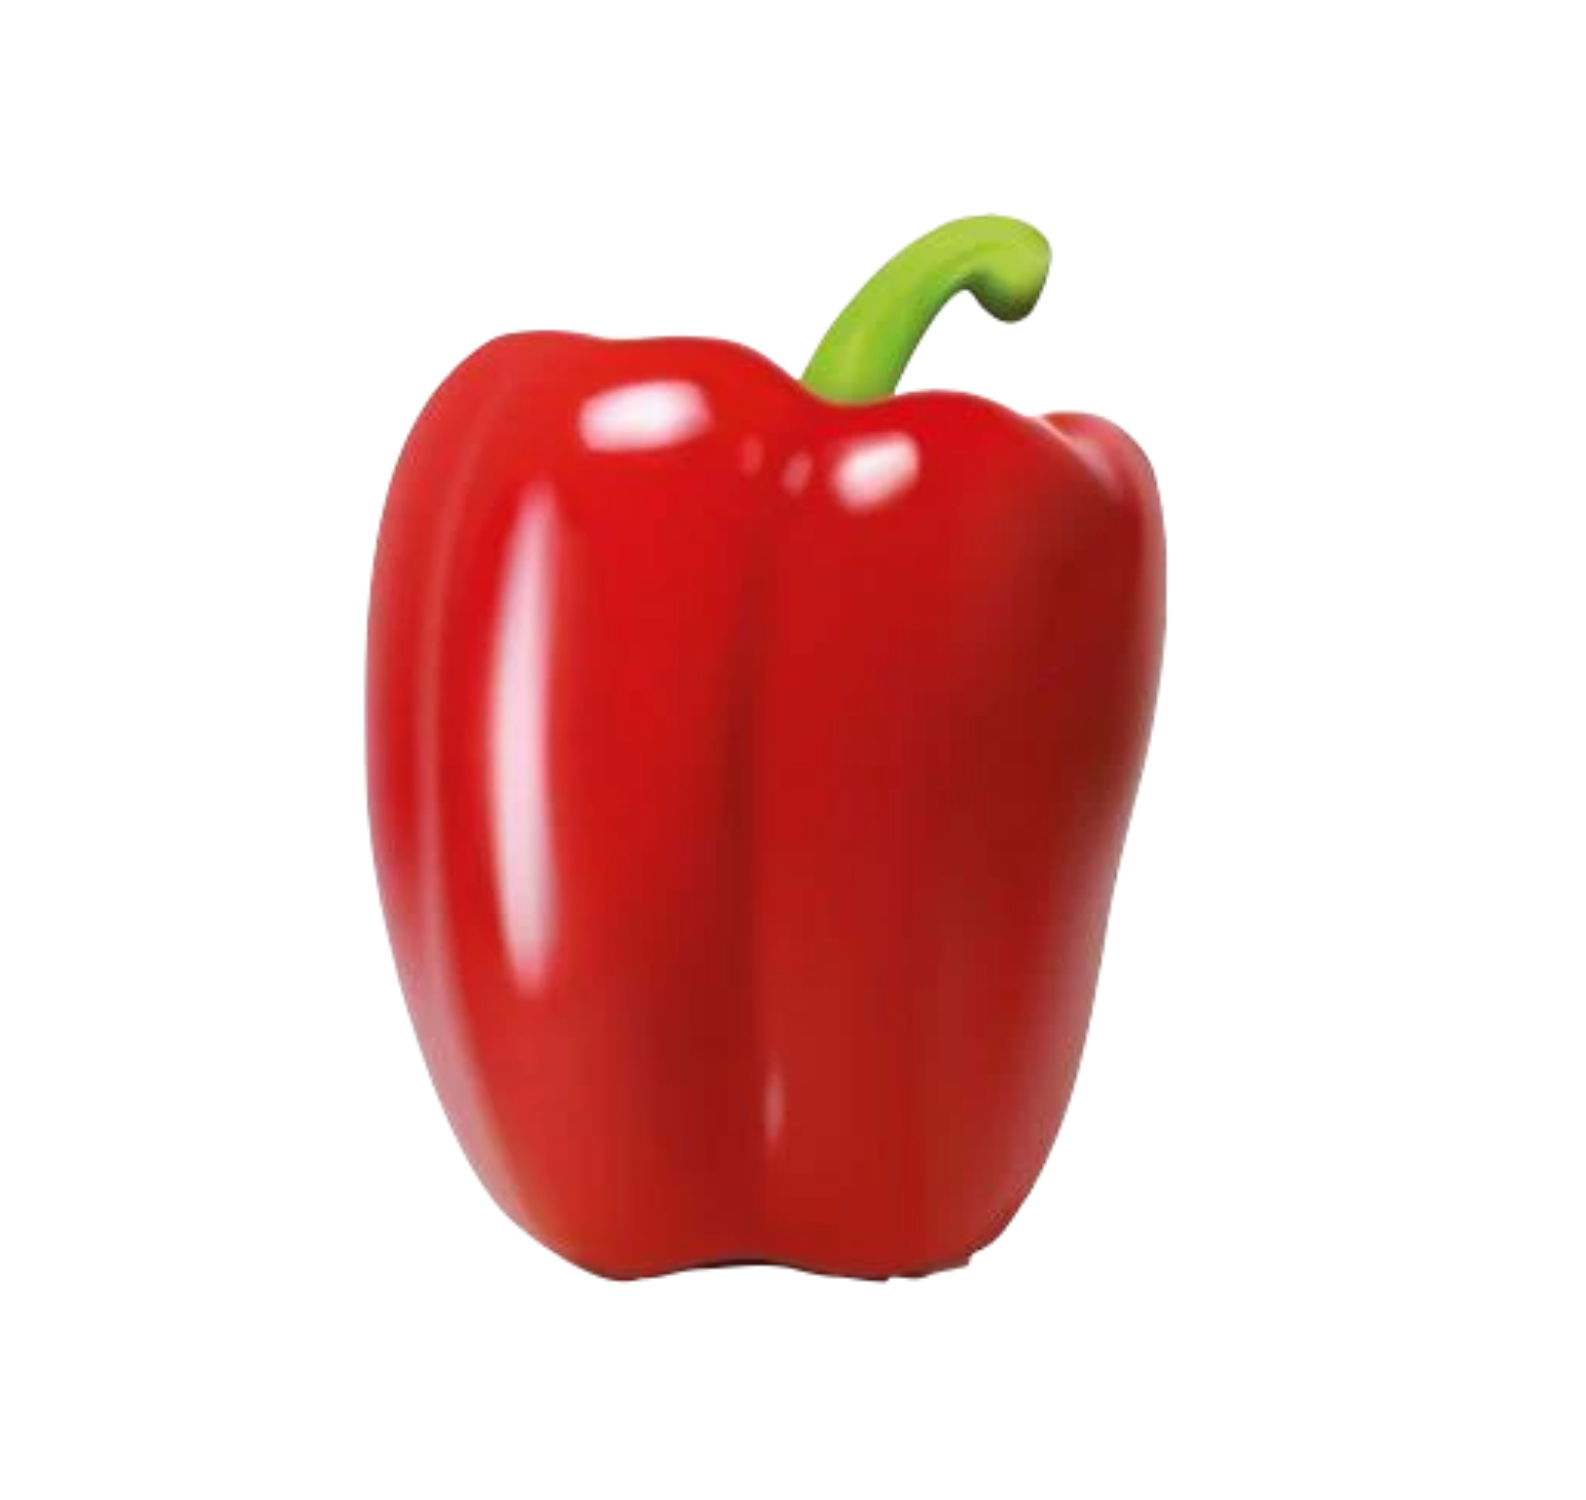 Bell pepper green – Desi Grocery